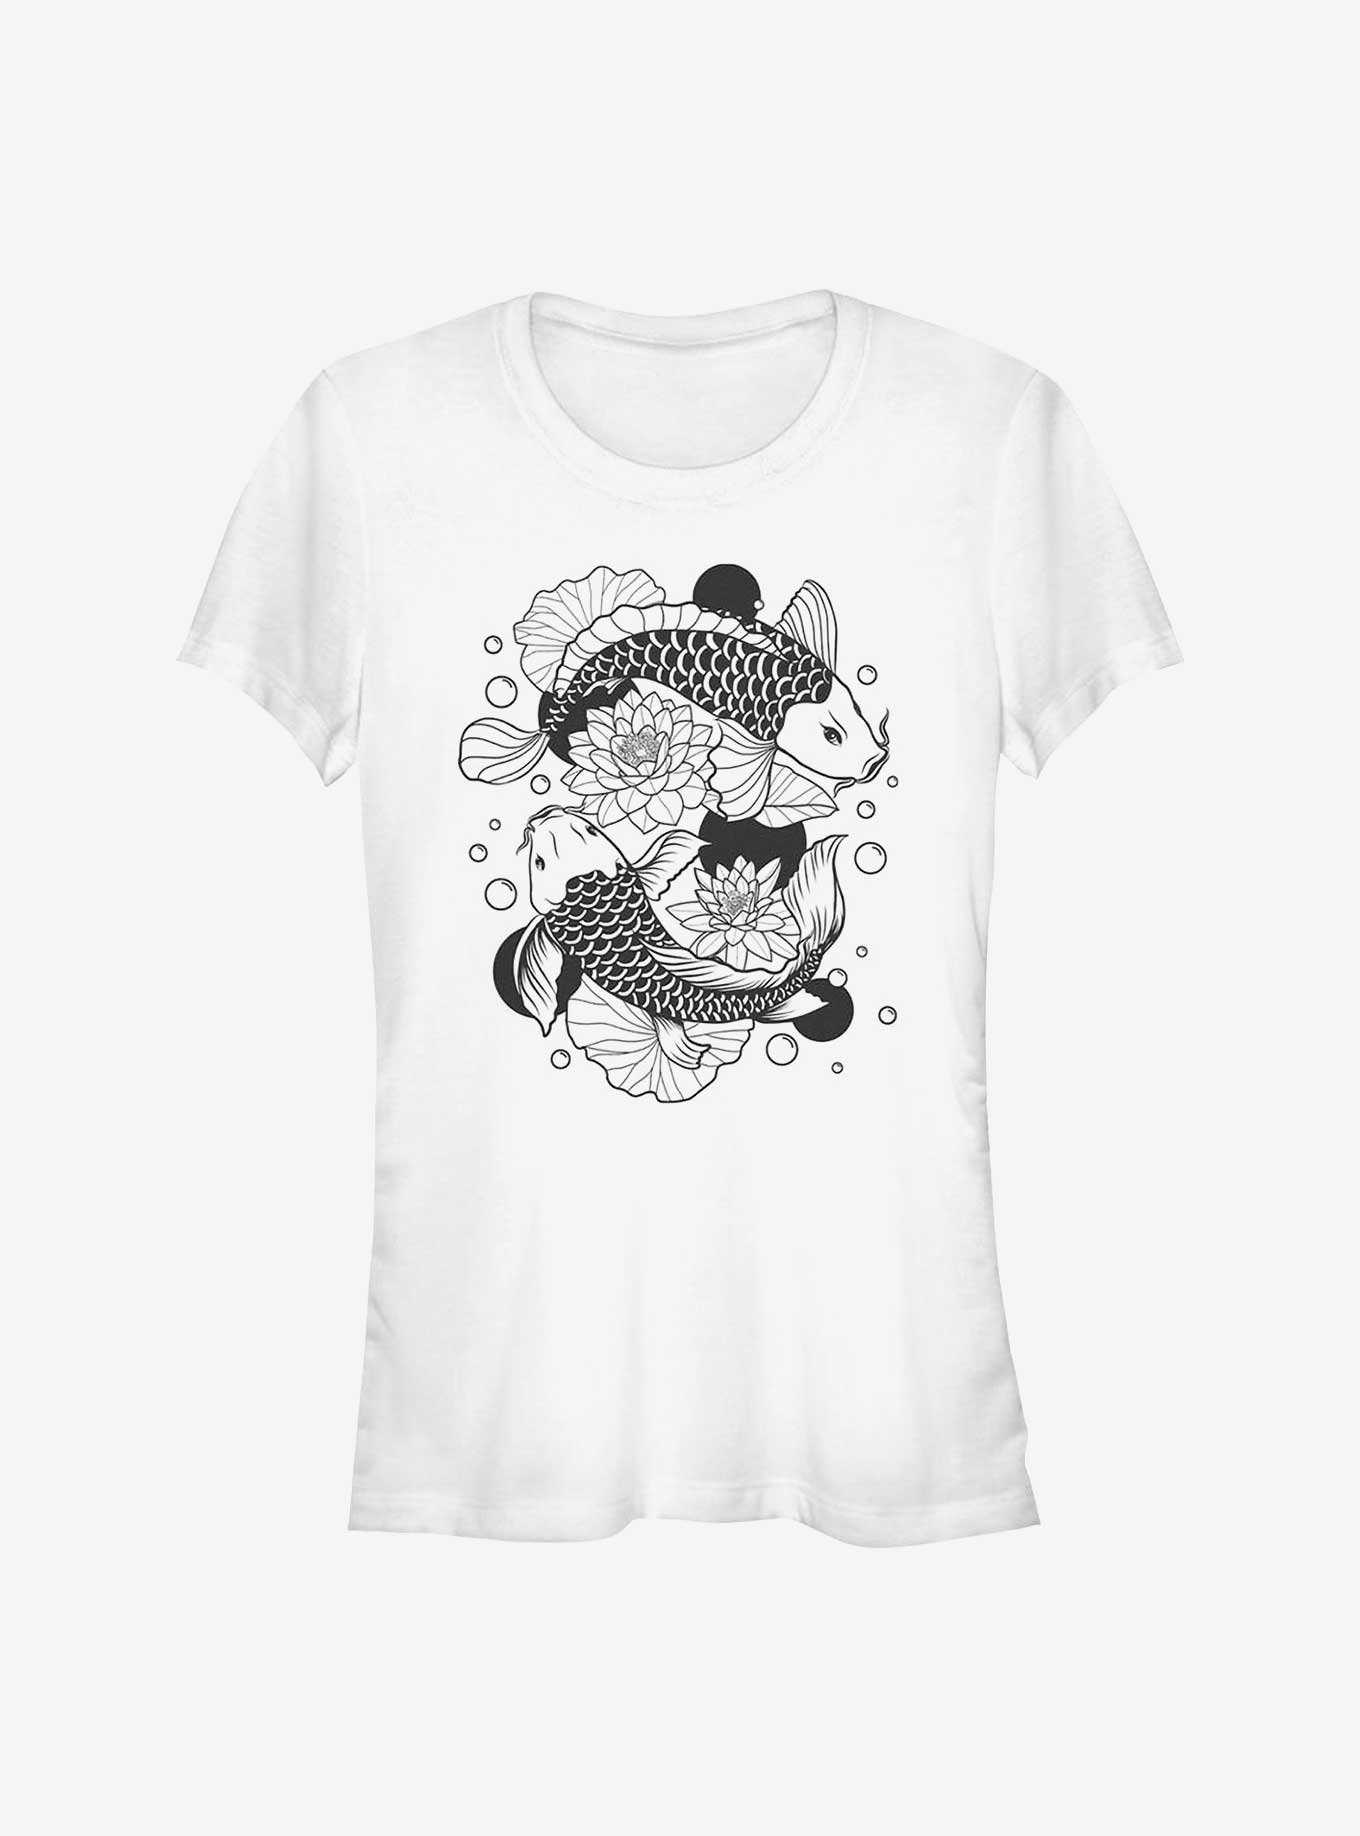 Koi Fishes Girls T-Shirt, , hi-res